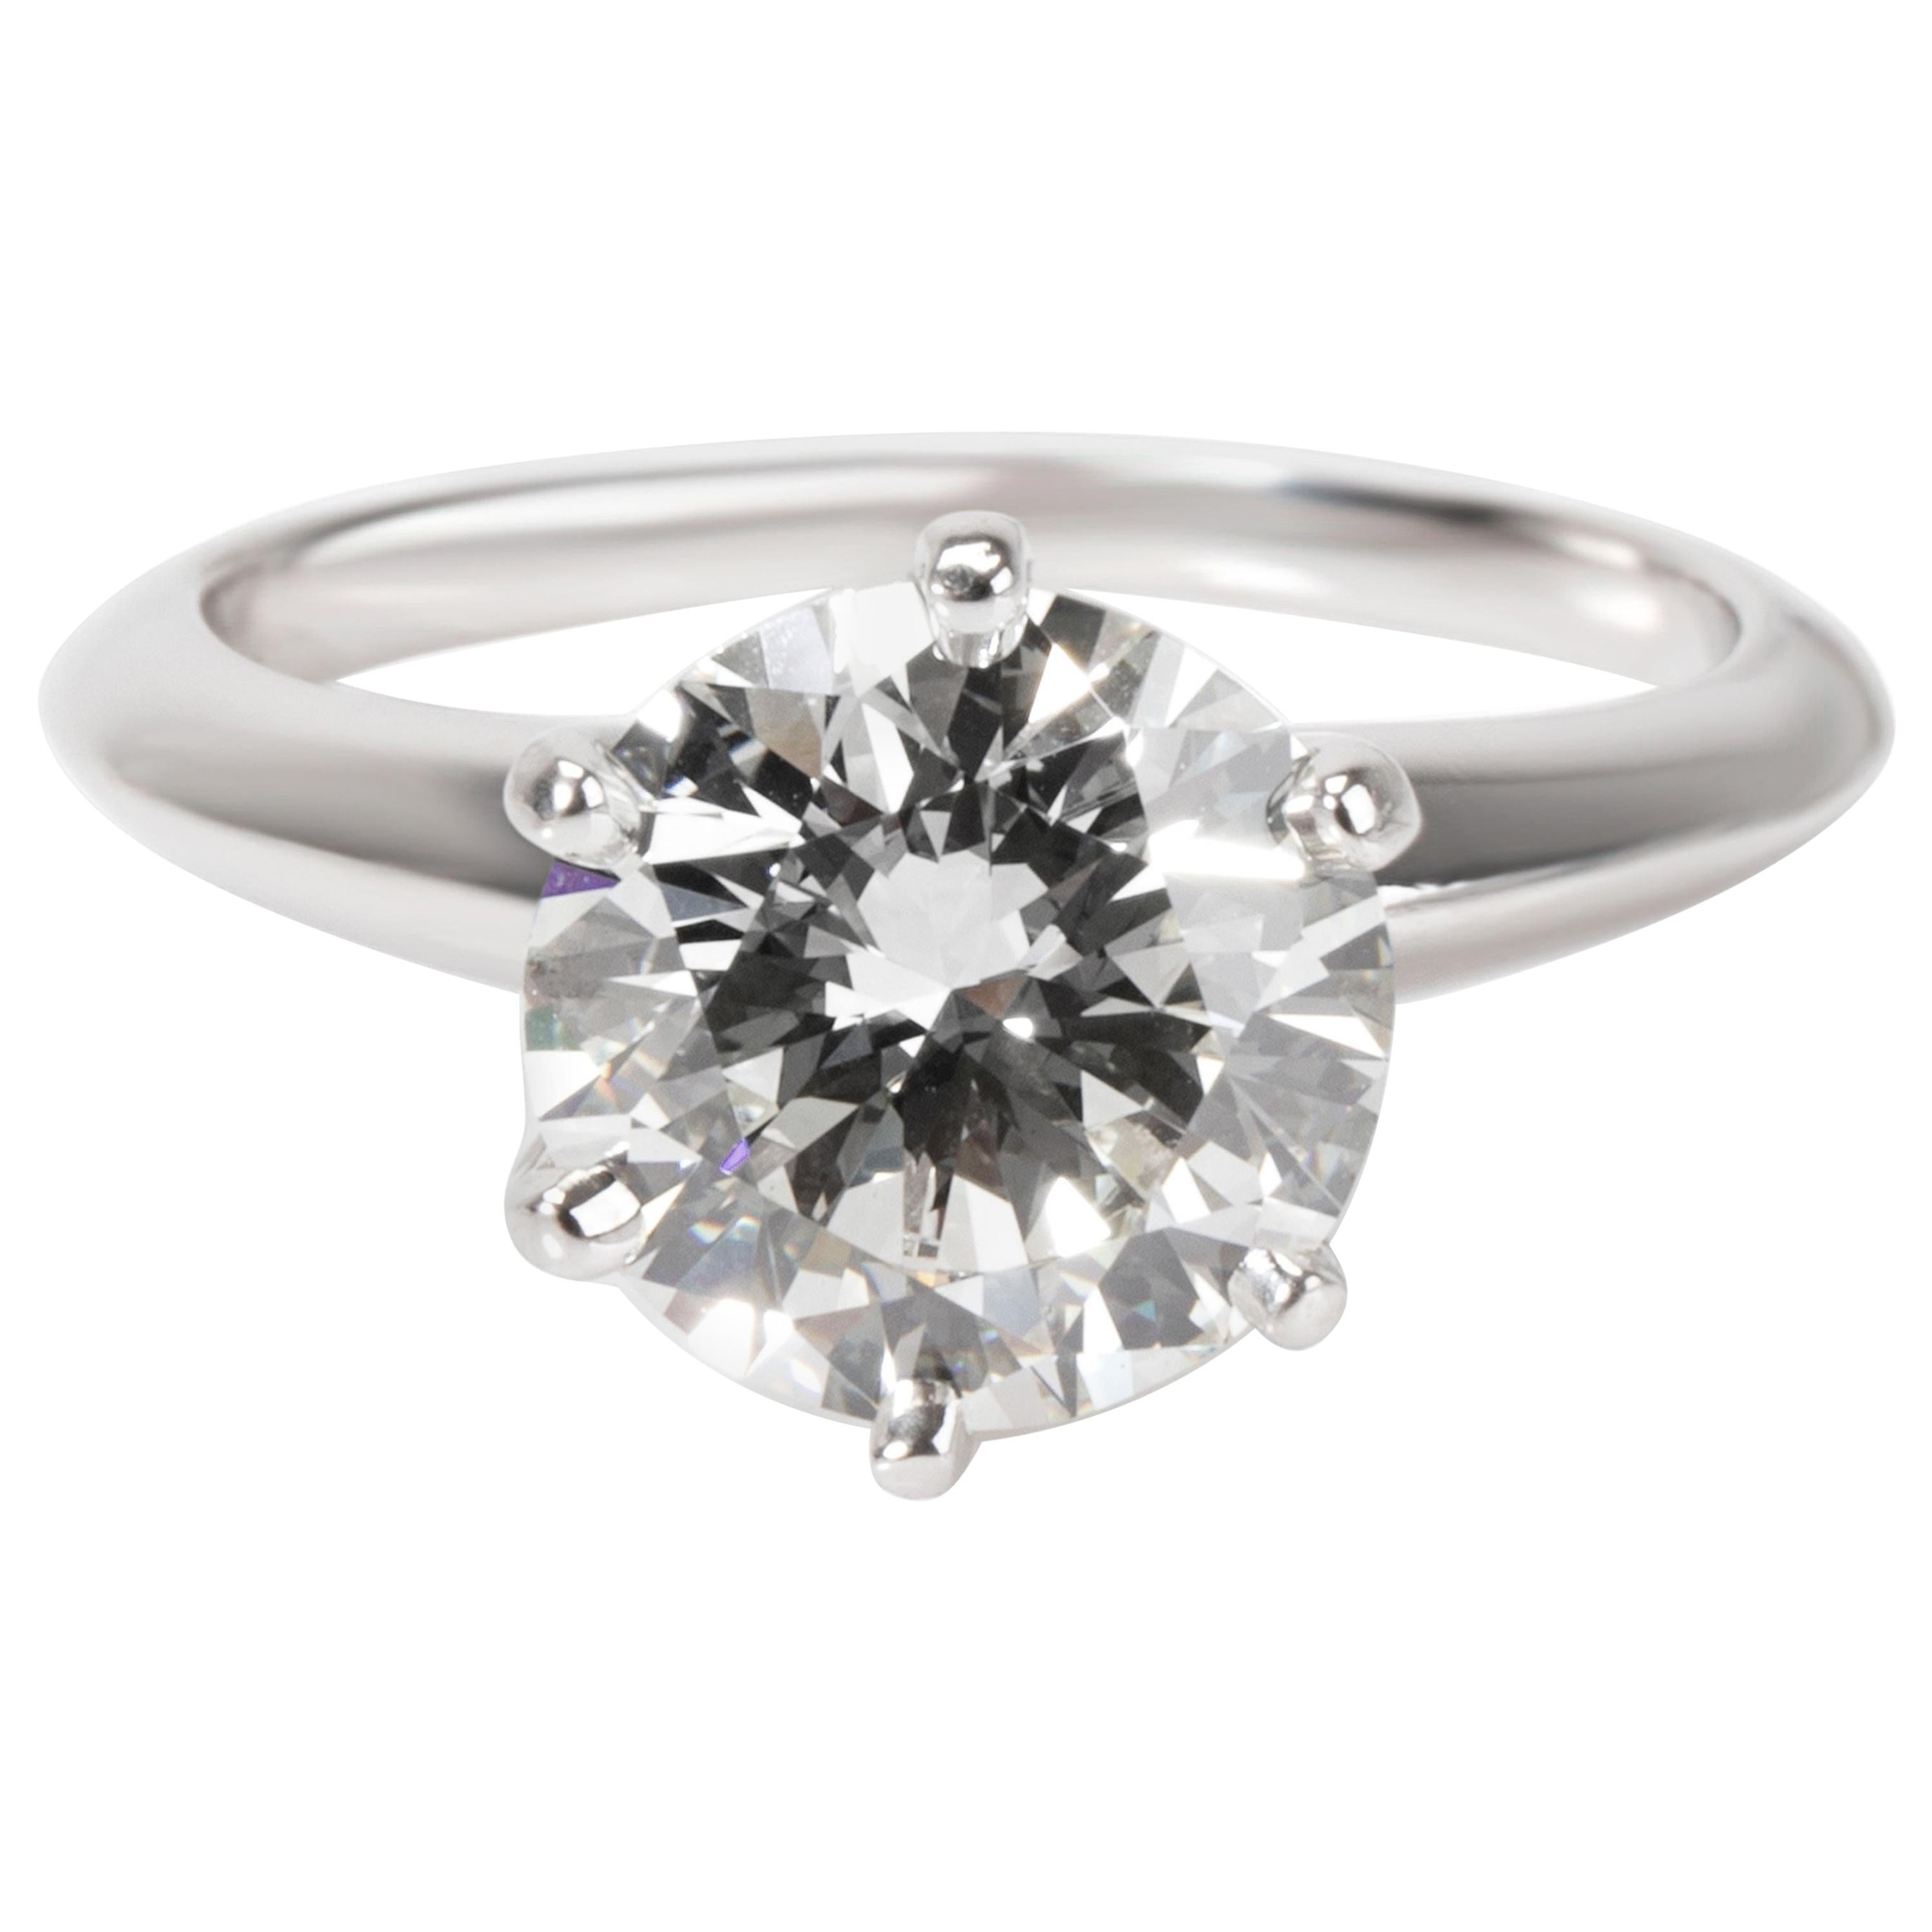 Tiffany & Co. Diamond Engagement Ring in Platinum I VS1 1.75 Carat